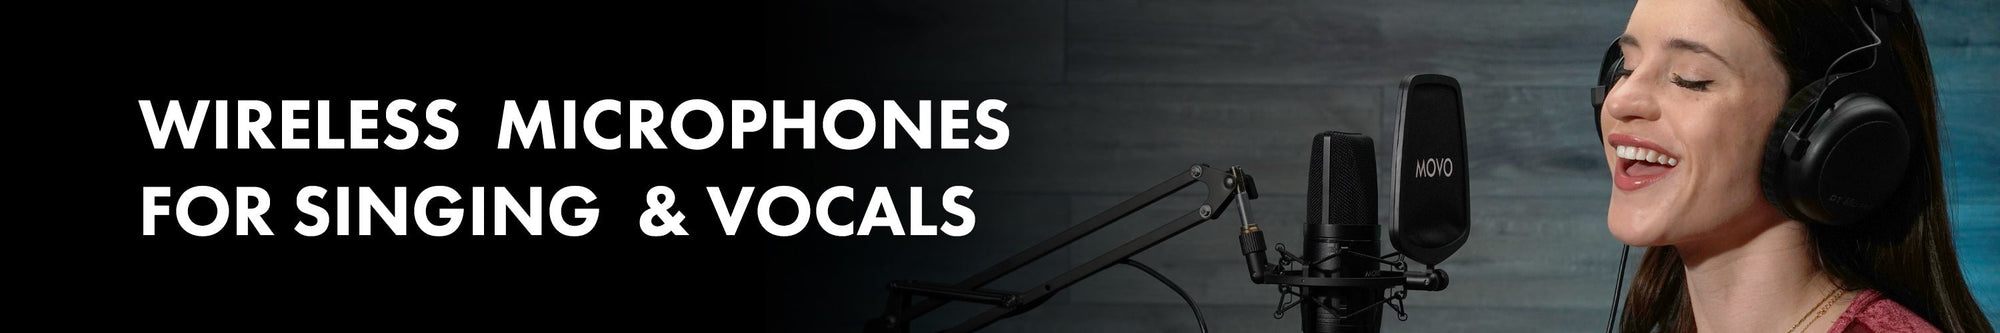 Wireless Microphones for Singing & Vocals